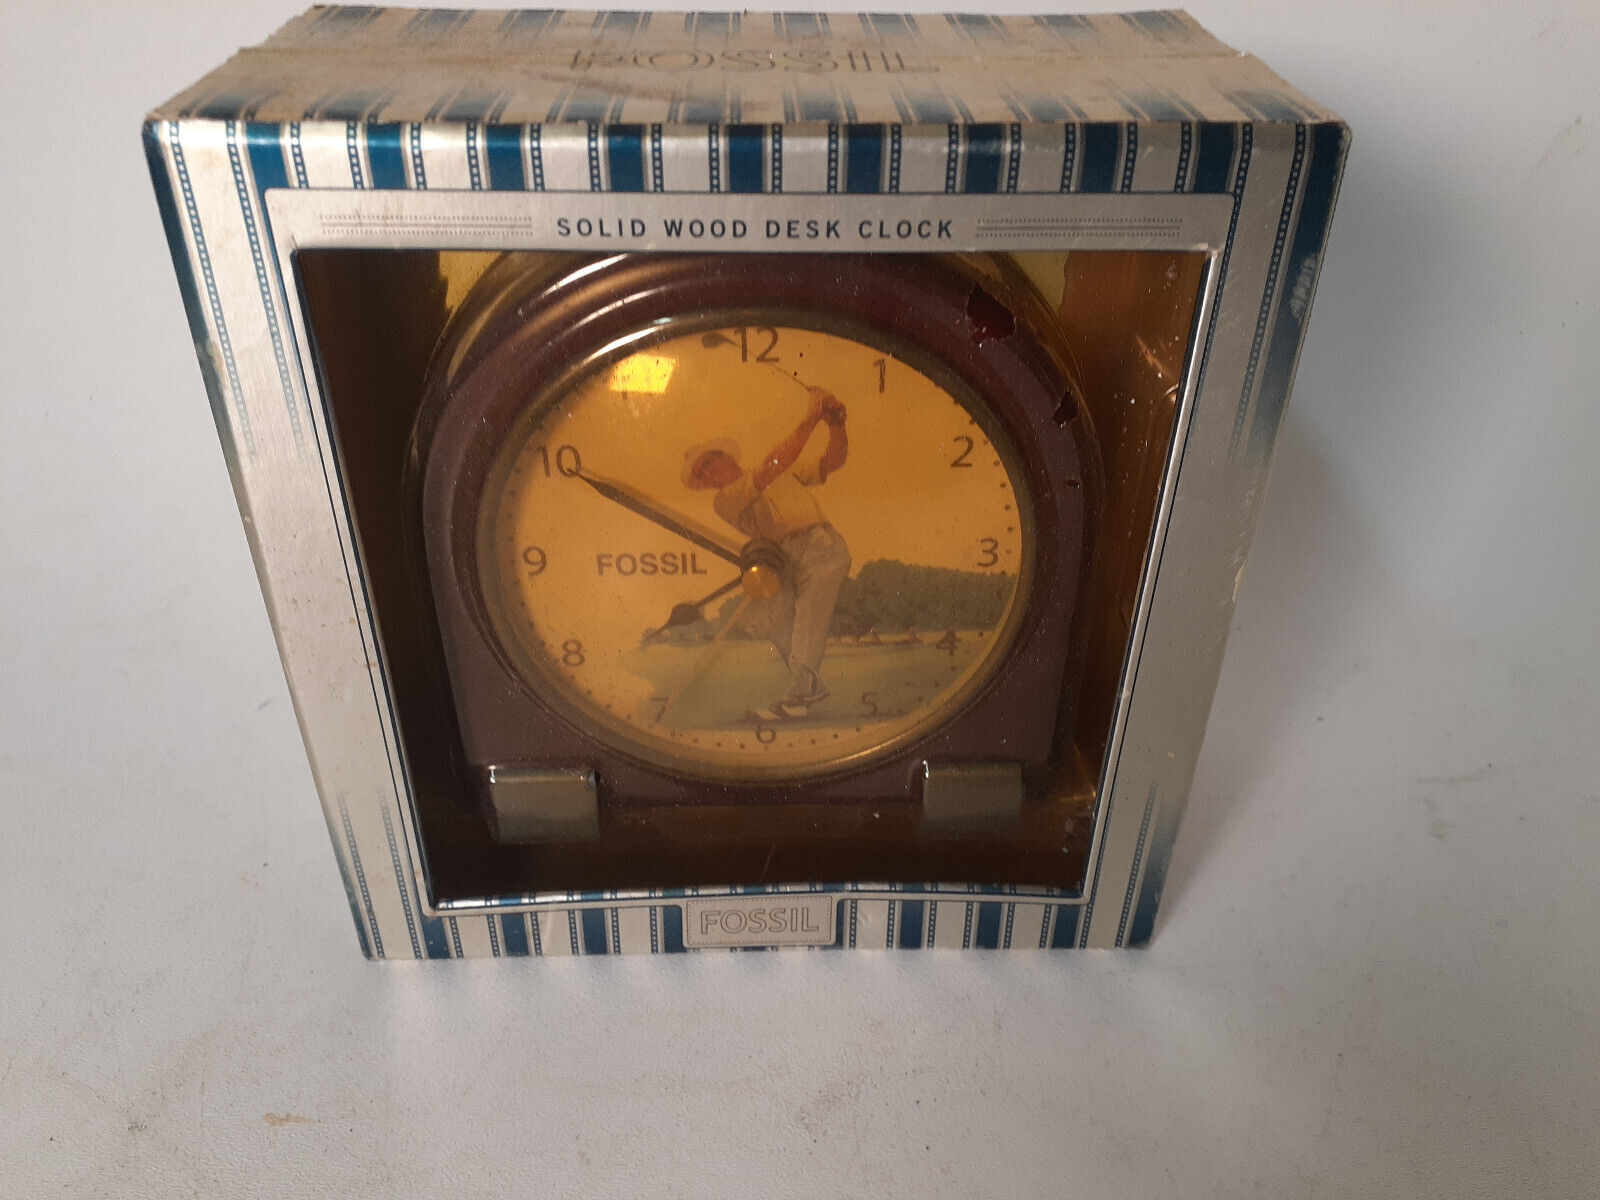 Vintage Fossil Solid Wood Desk Clock, Original Box, New